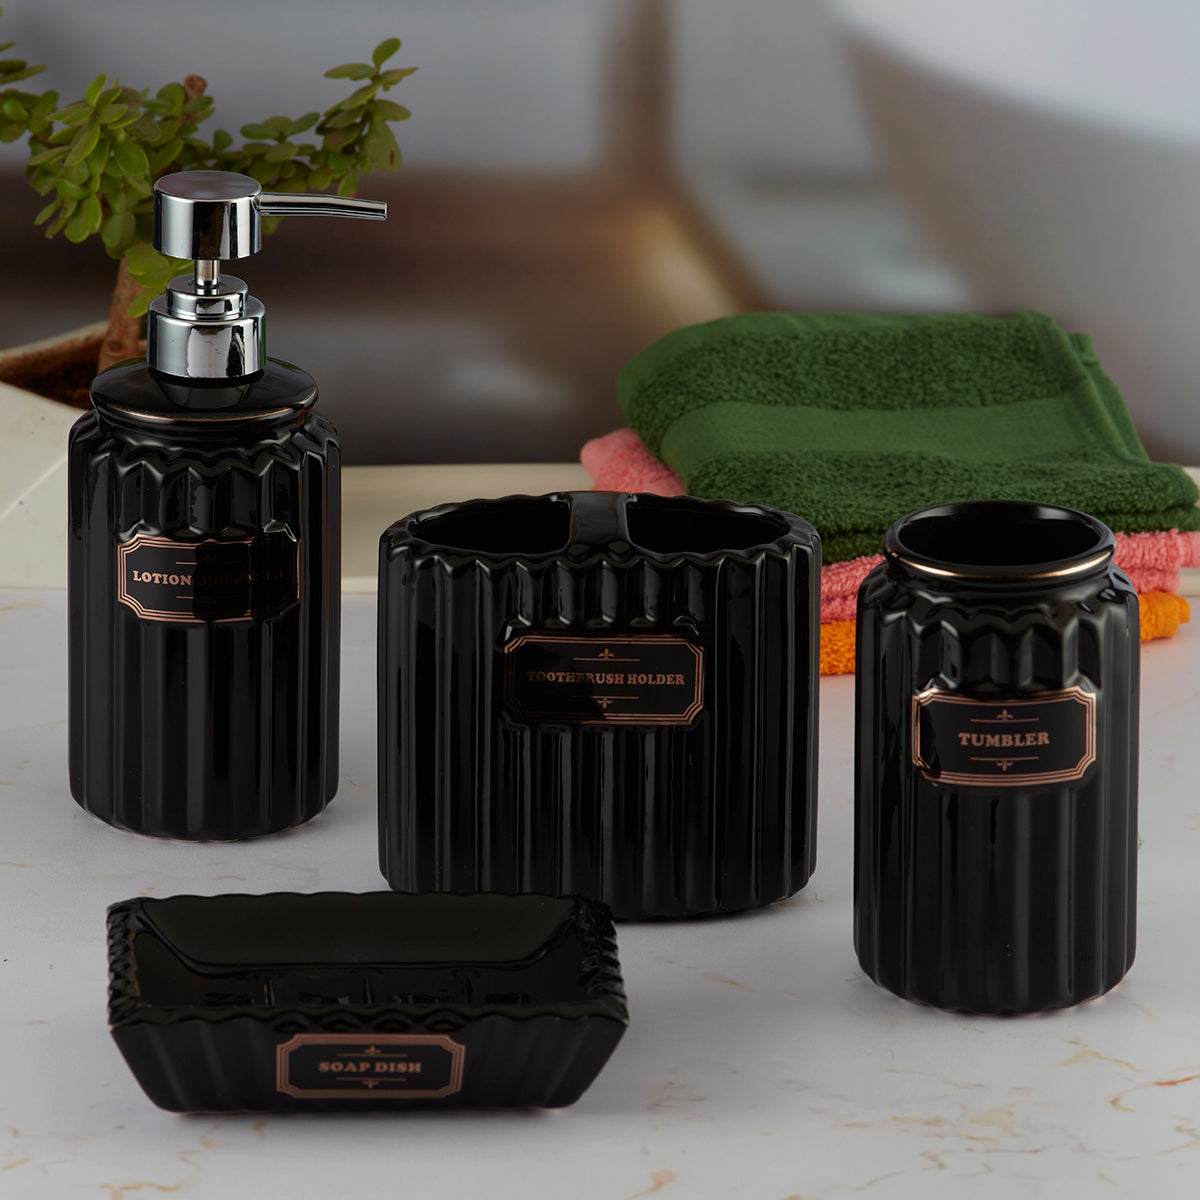 Ceramic Bathroom Accessories Set of 4 Bath Set with Soap Dispenser (8184)